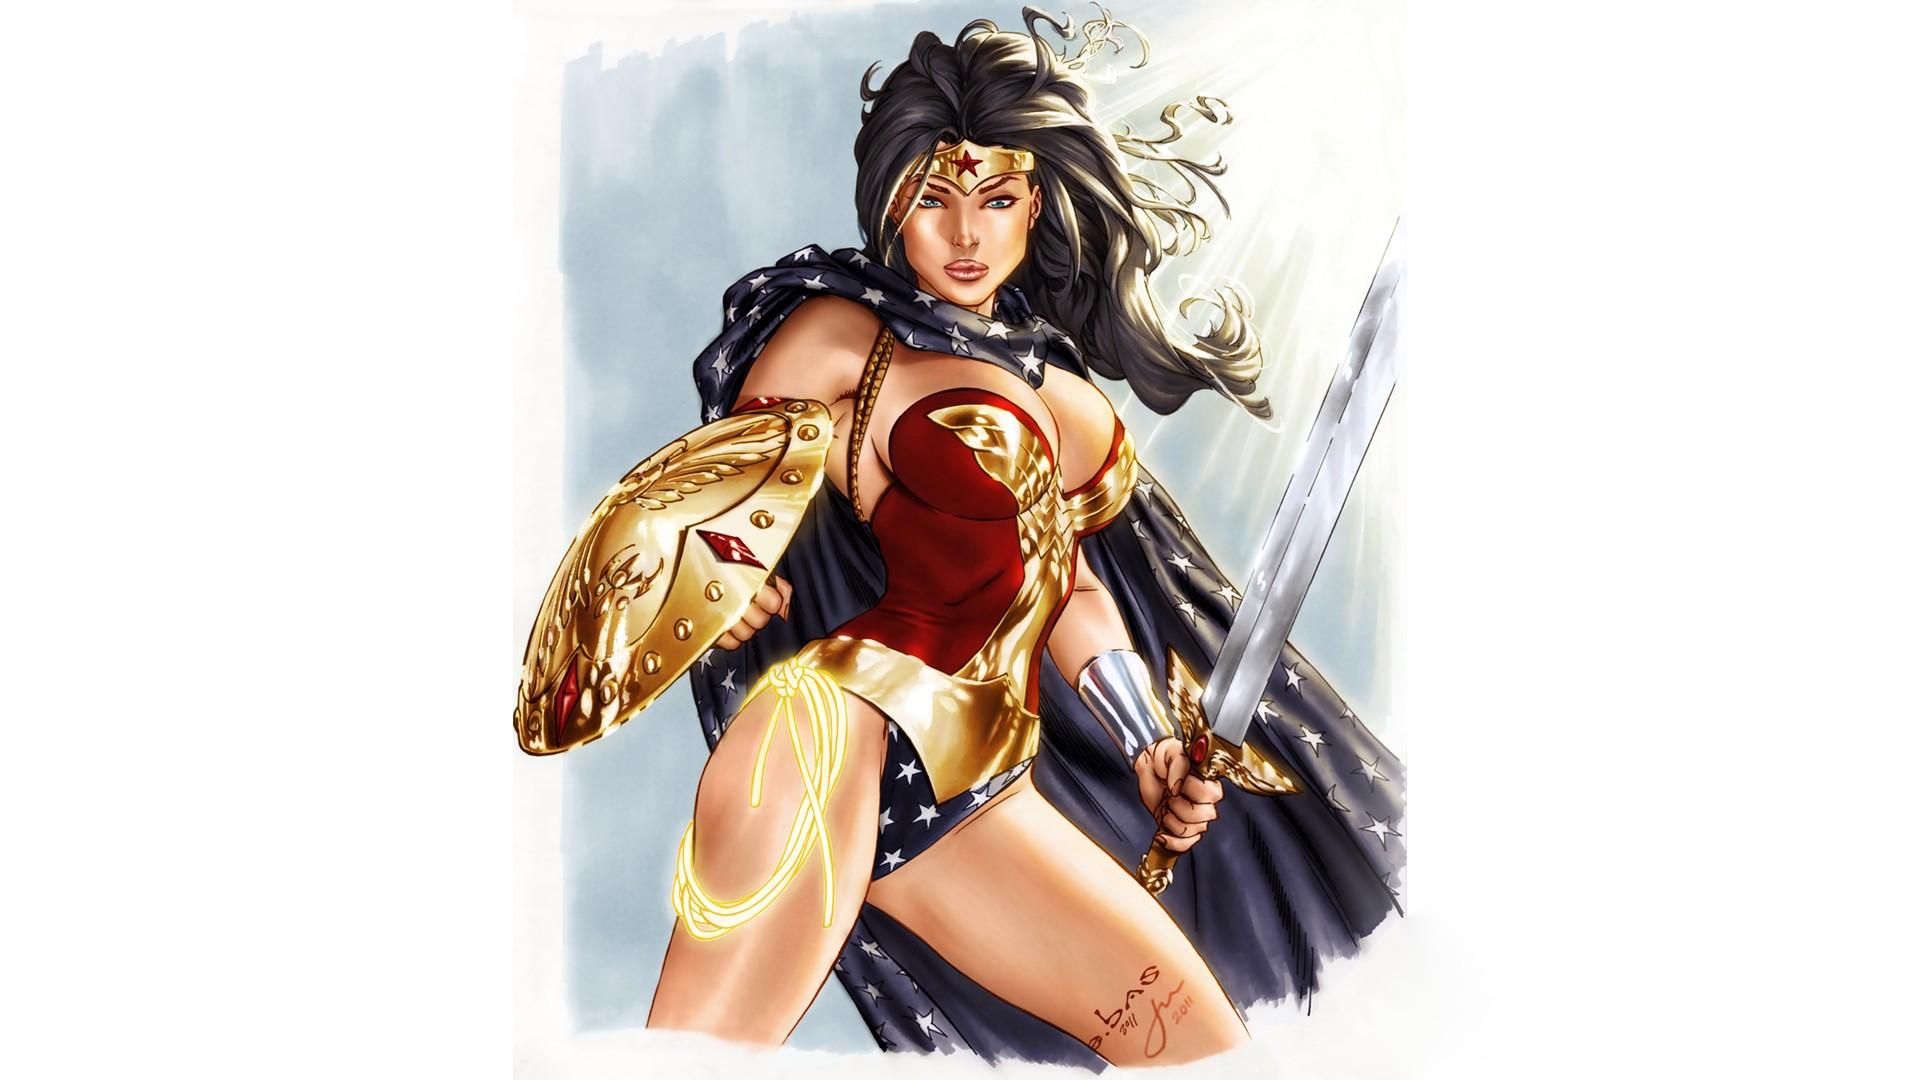 women, DC Comics, comics, models, superheroes, illustrations, amazon, heroine, Wonder Woman, Penichet, sword and shield wallpaper